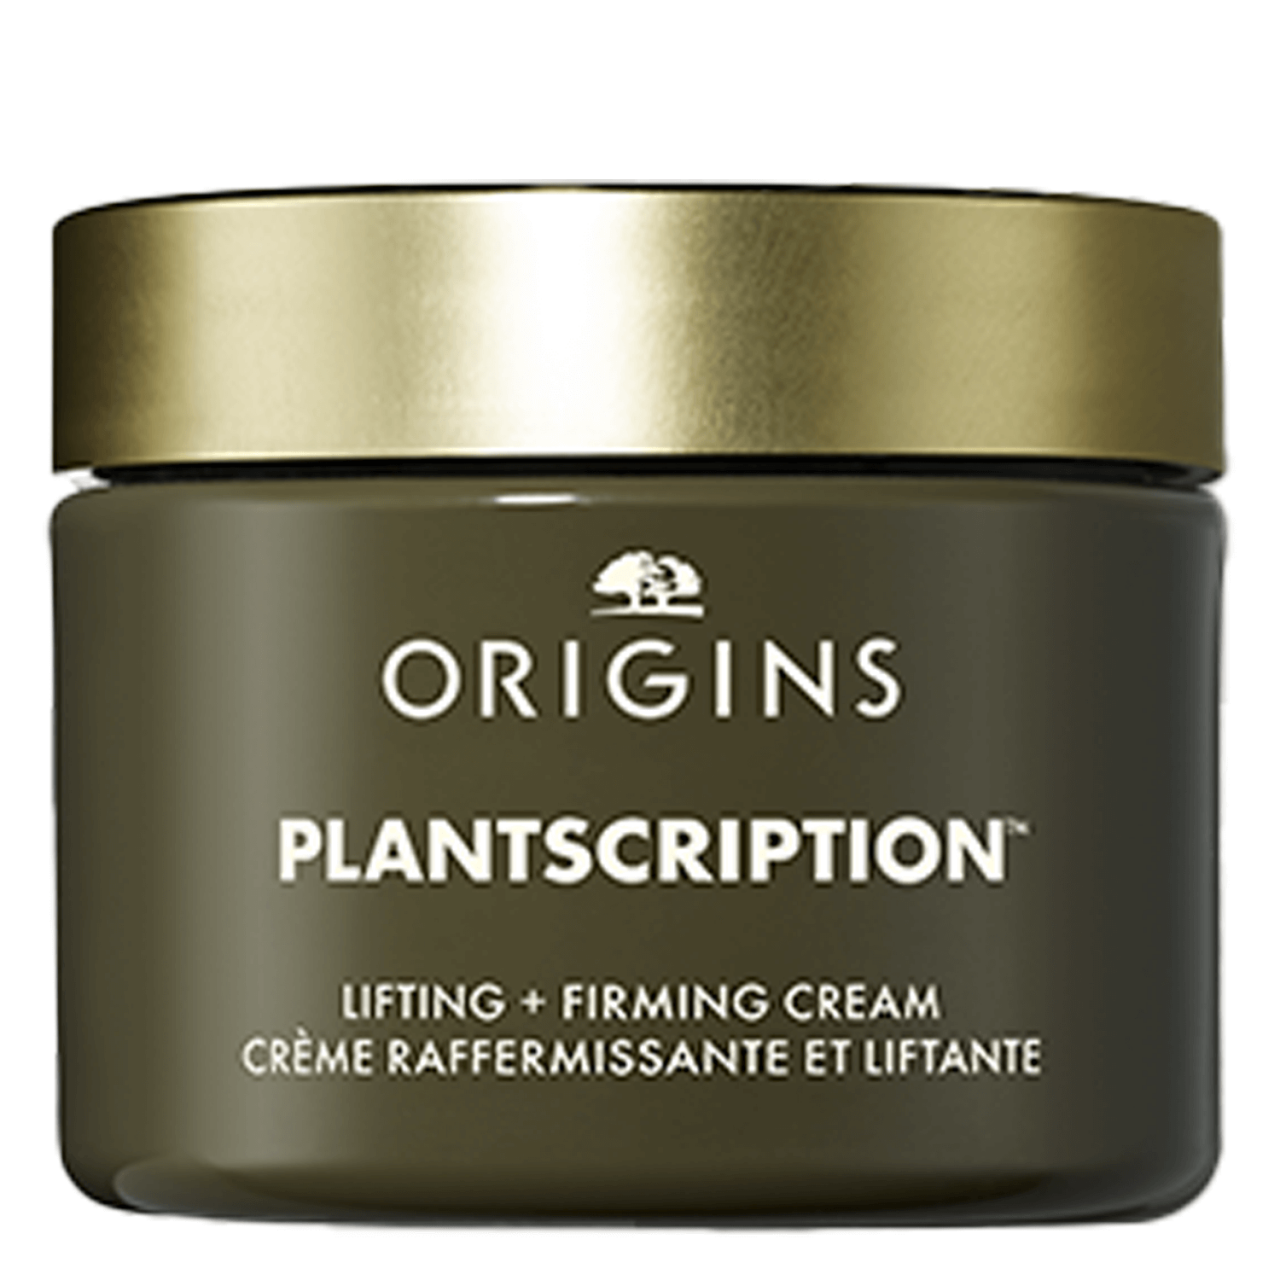 Origins Plantscription - Lifting + Firming Cream von Origins